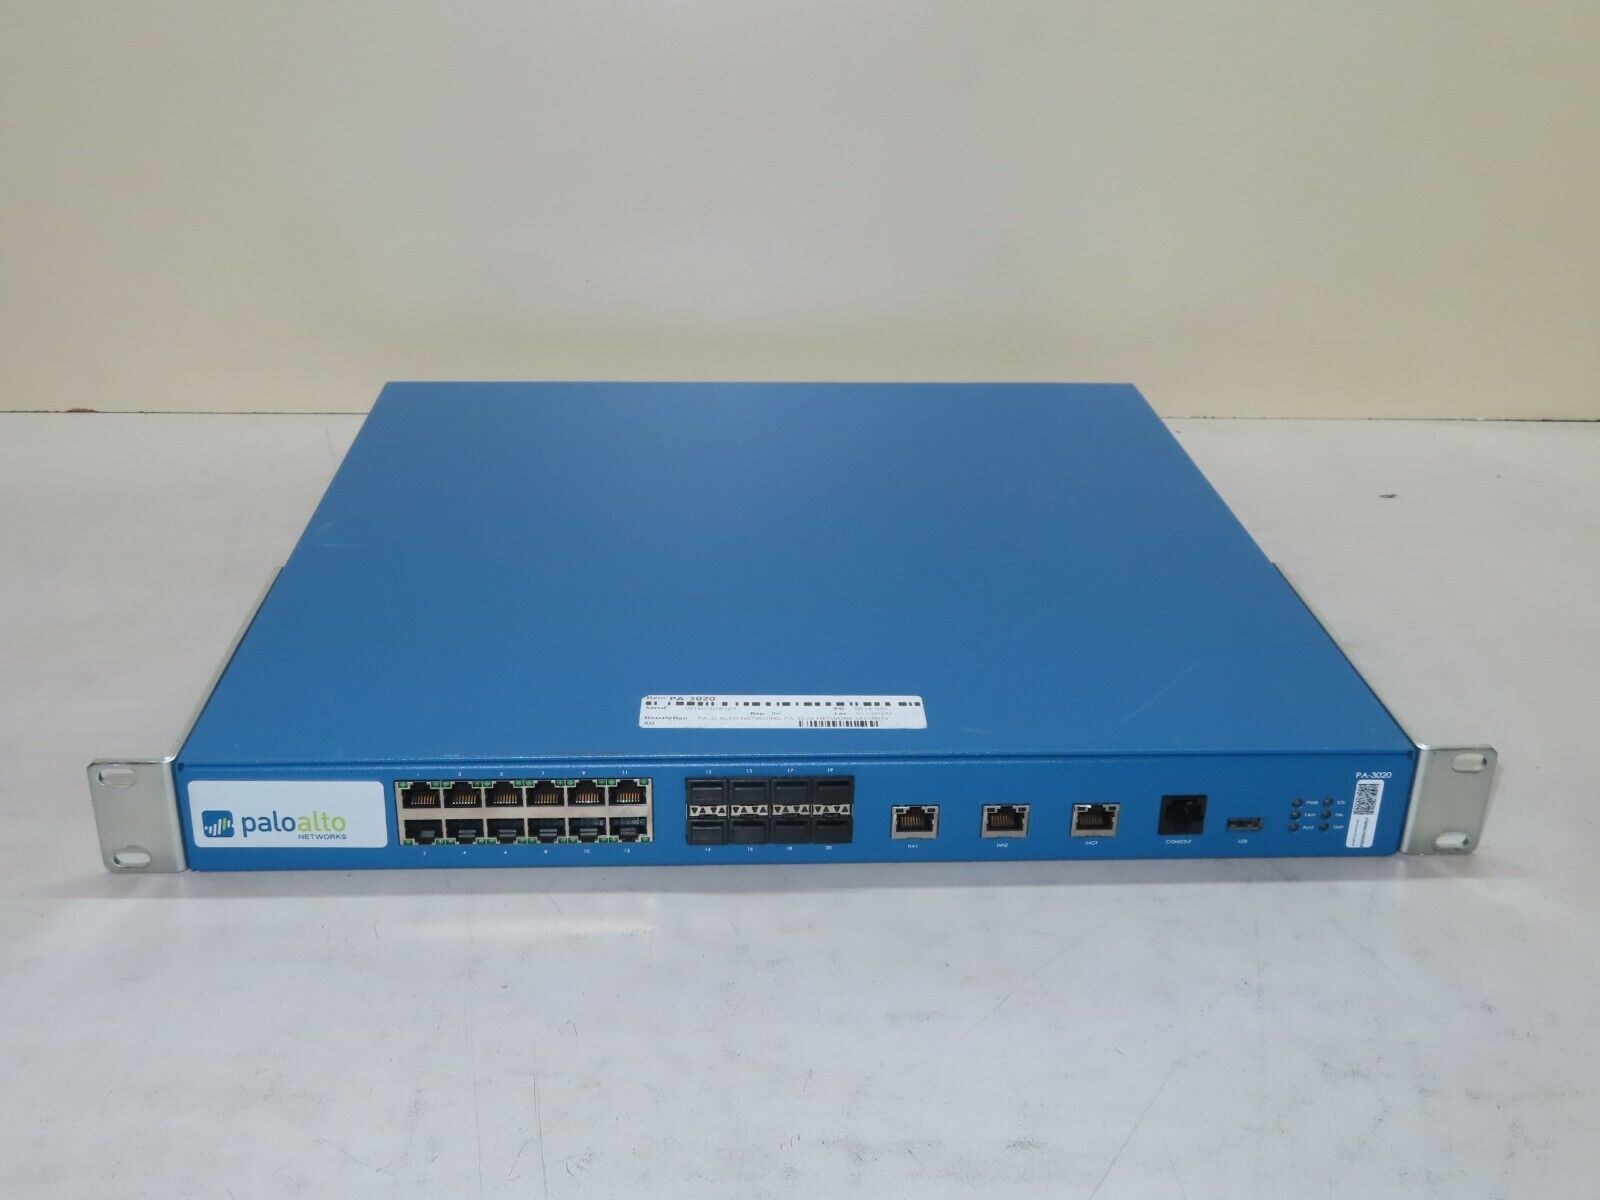 Palo Alto PA-3020 - Network Security Appliance Firewall